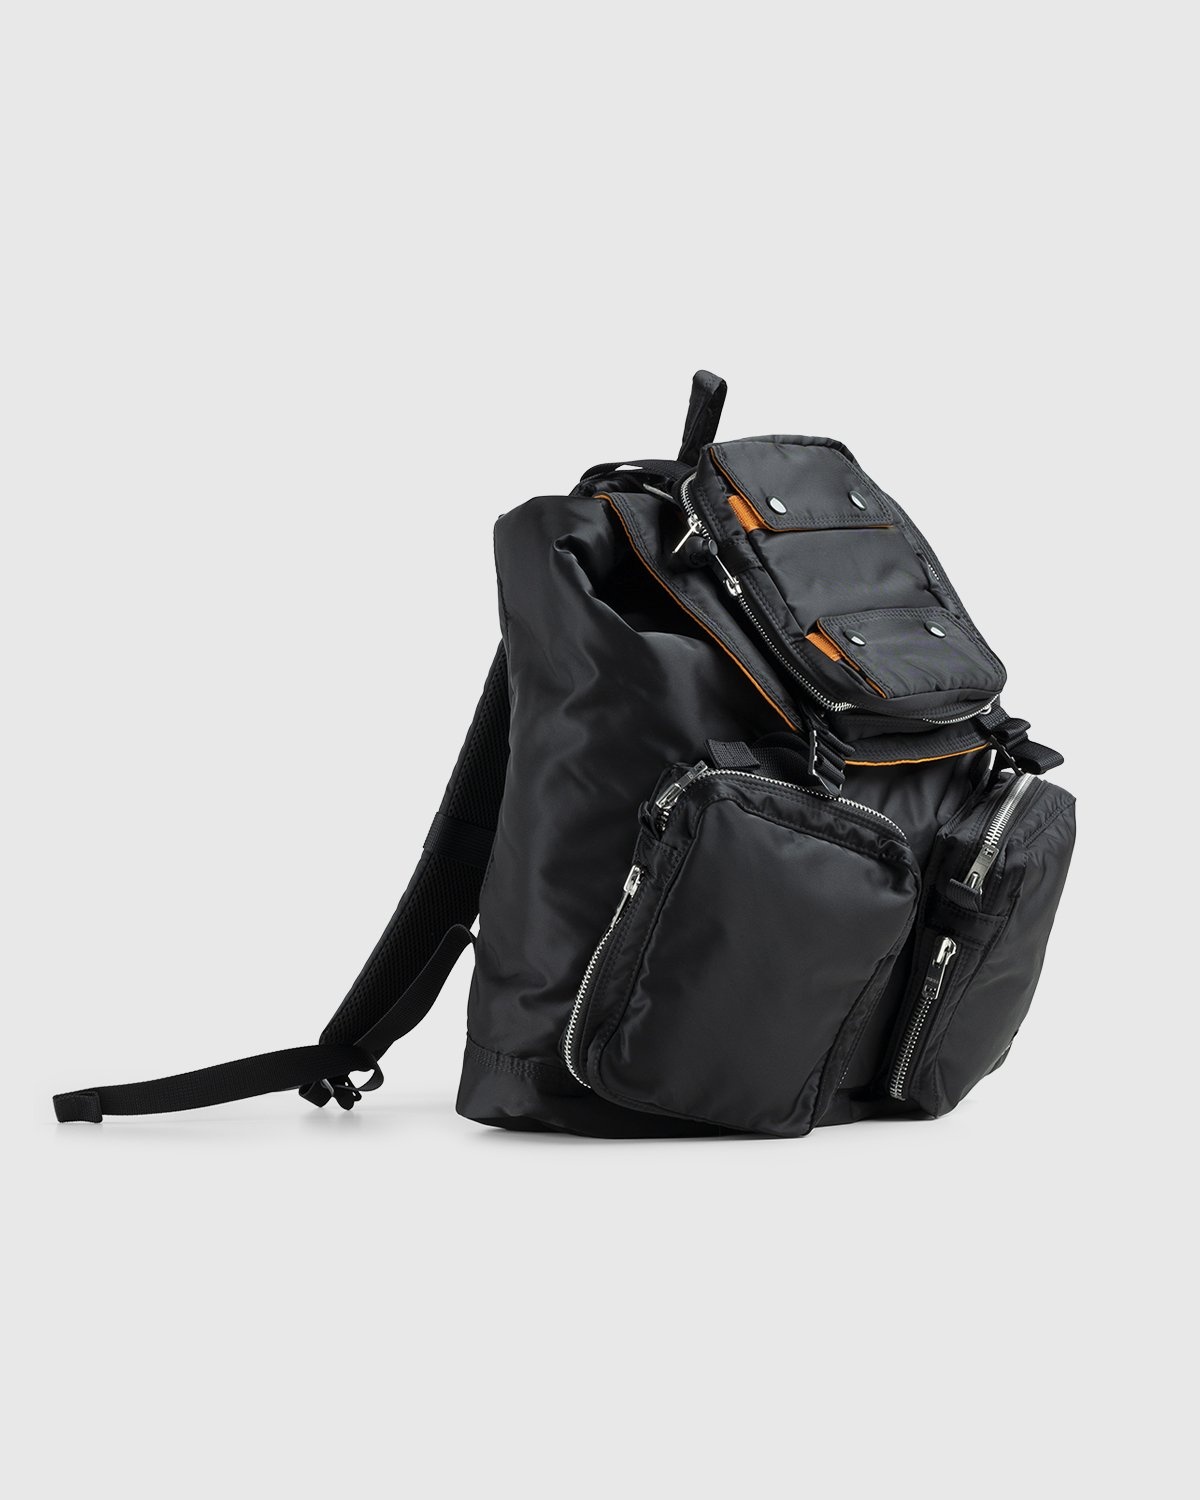 Porter-Yoshida & Co. – Rucksack Black - Bags - Black - Image 3